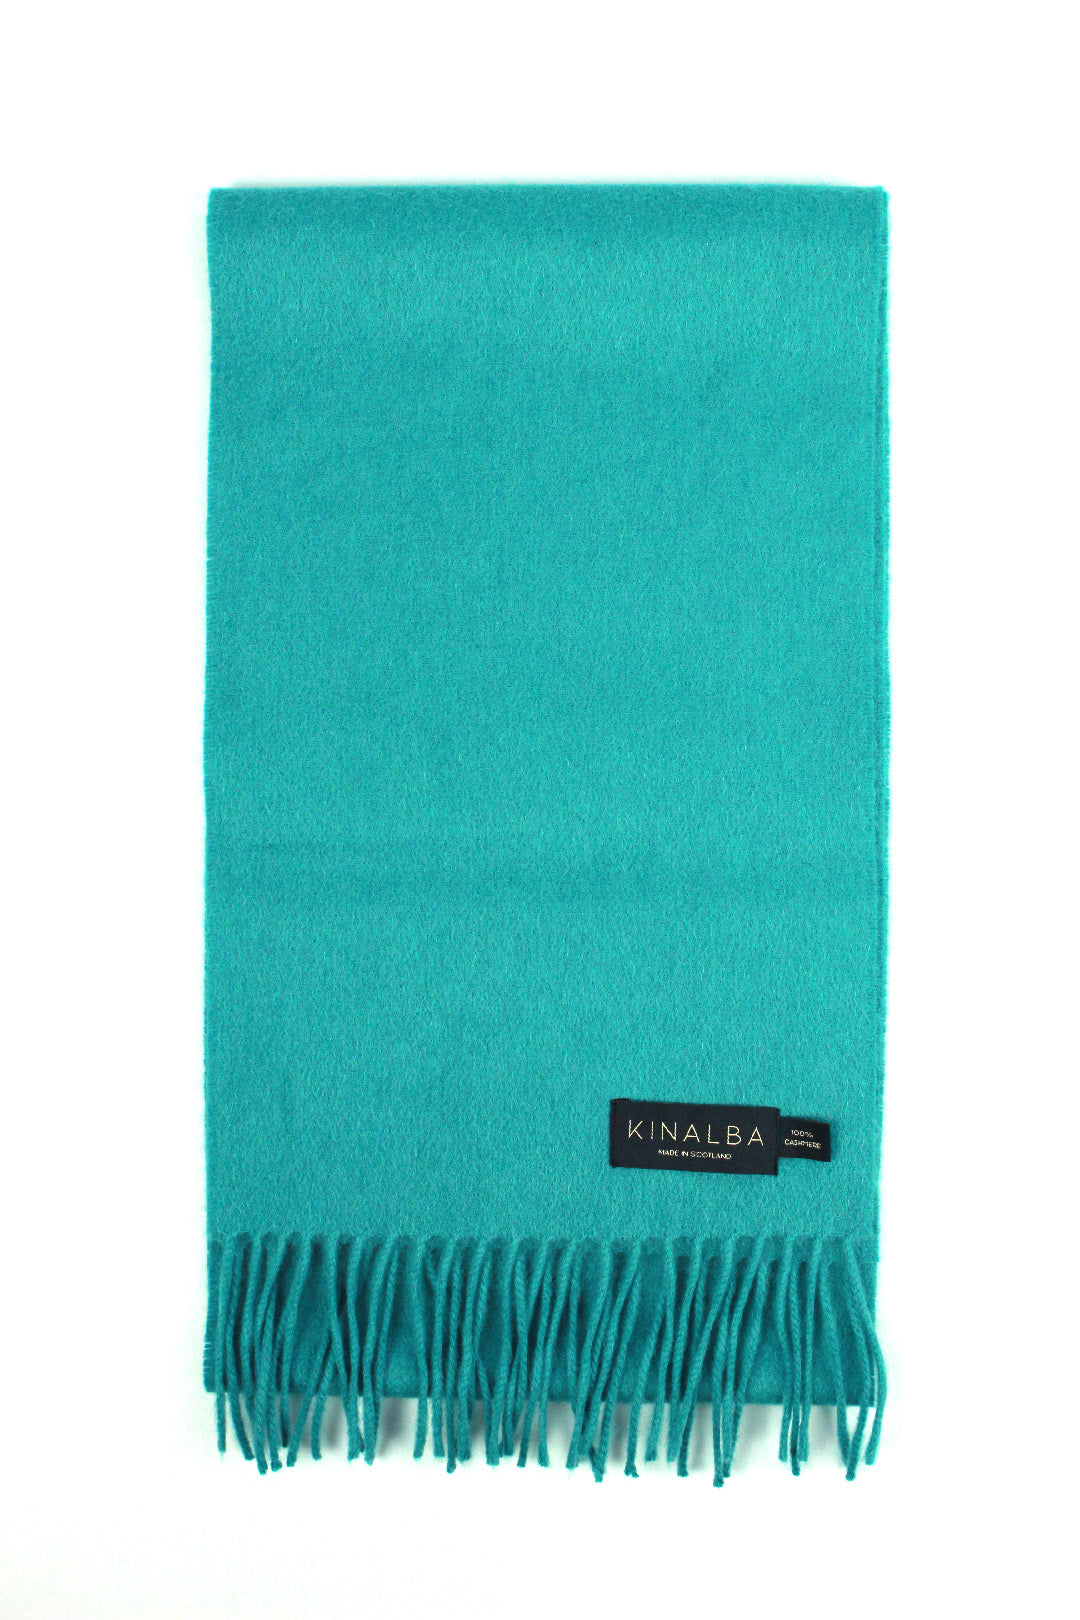 Sea marine scarf 100% cashmere. Scottish Textiles Showcase